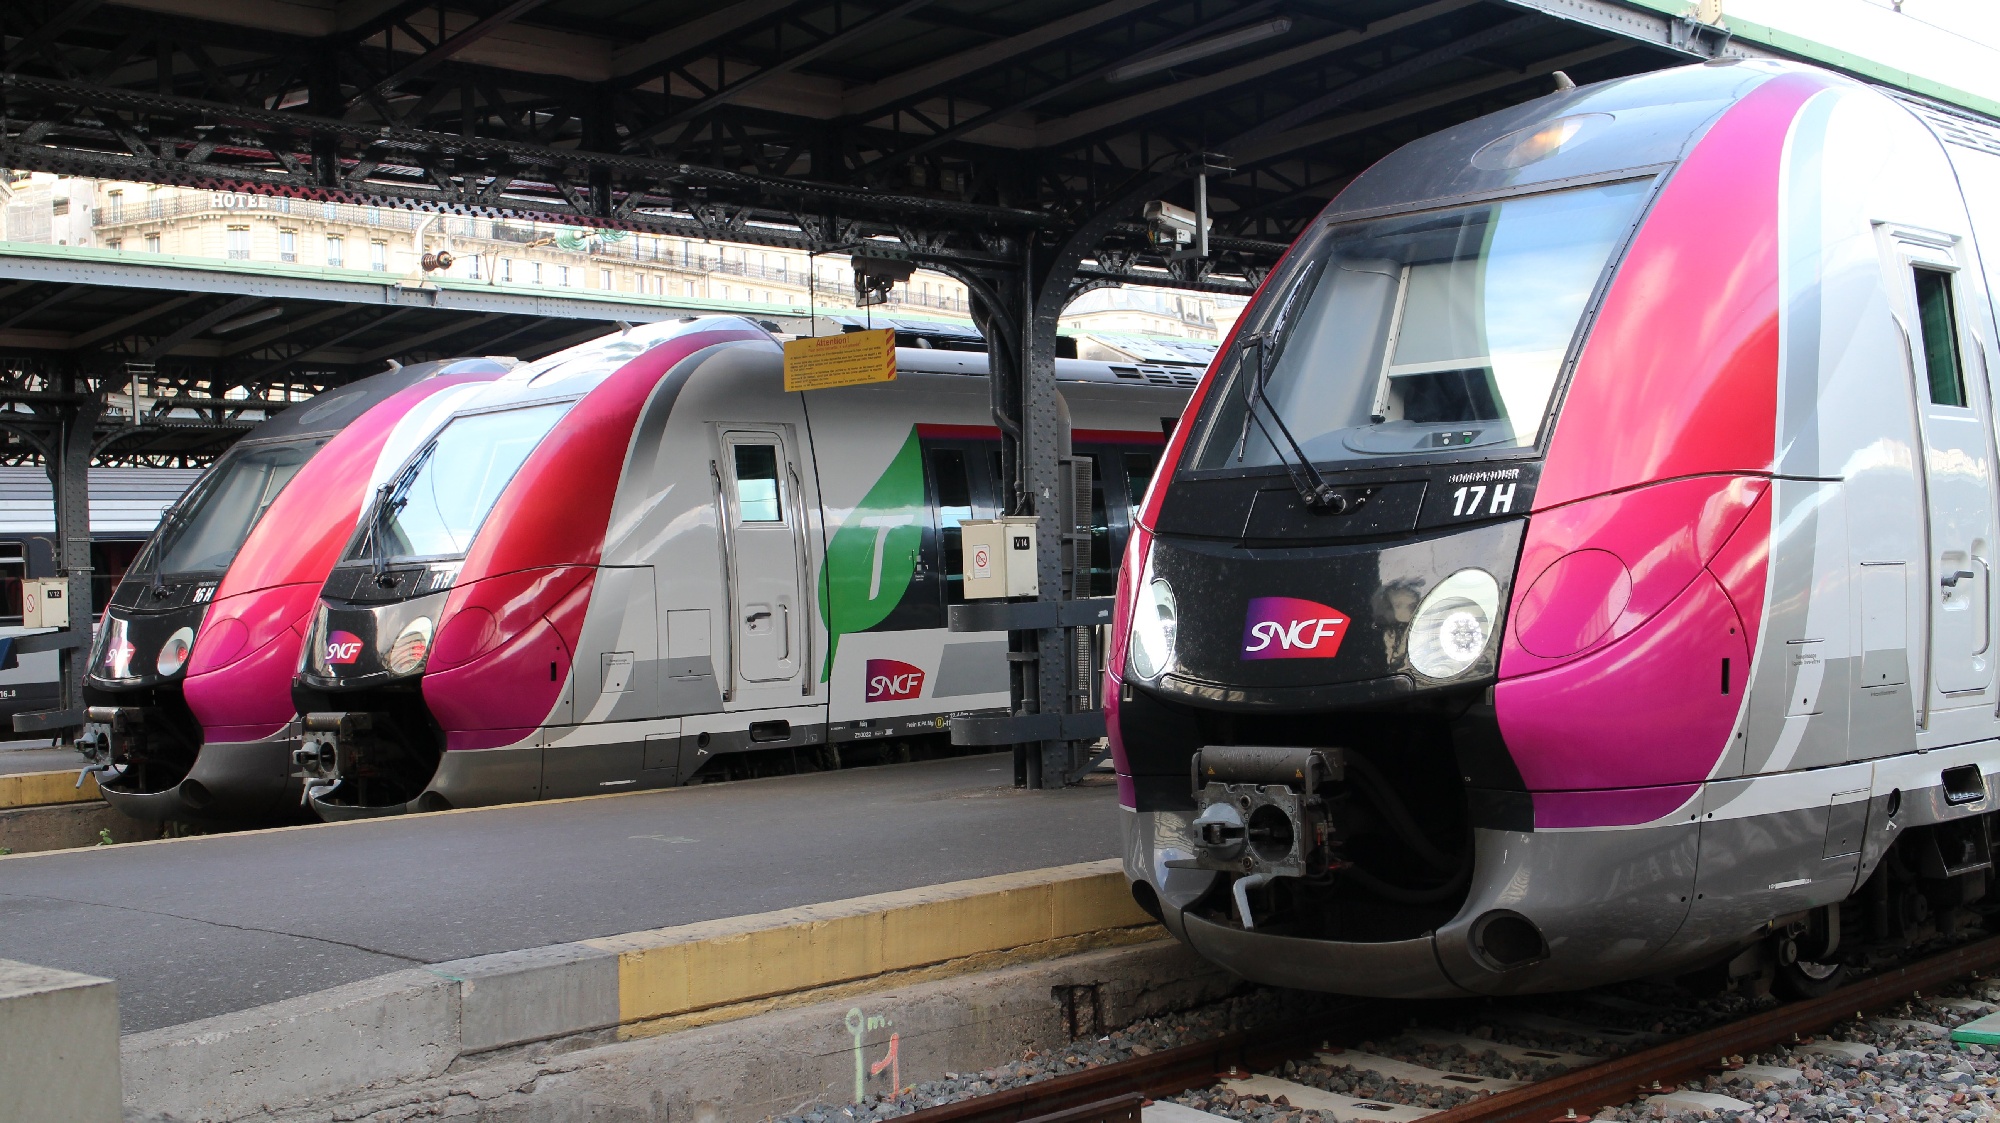 SNCF trains